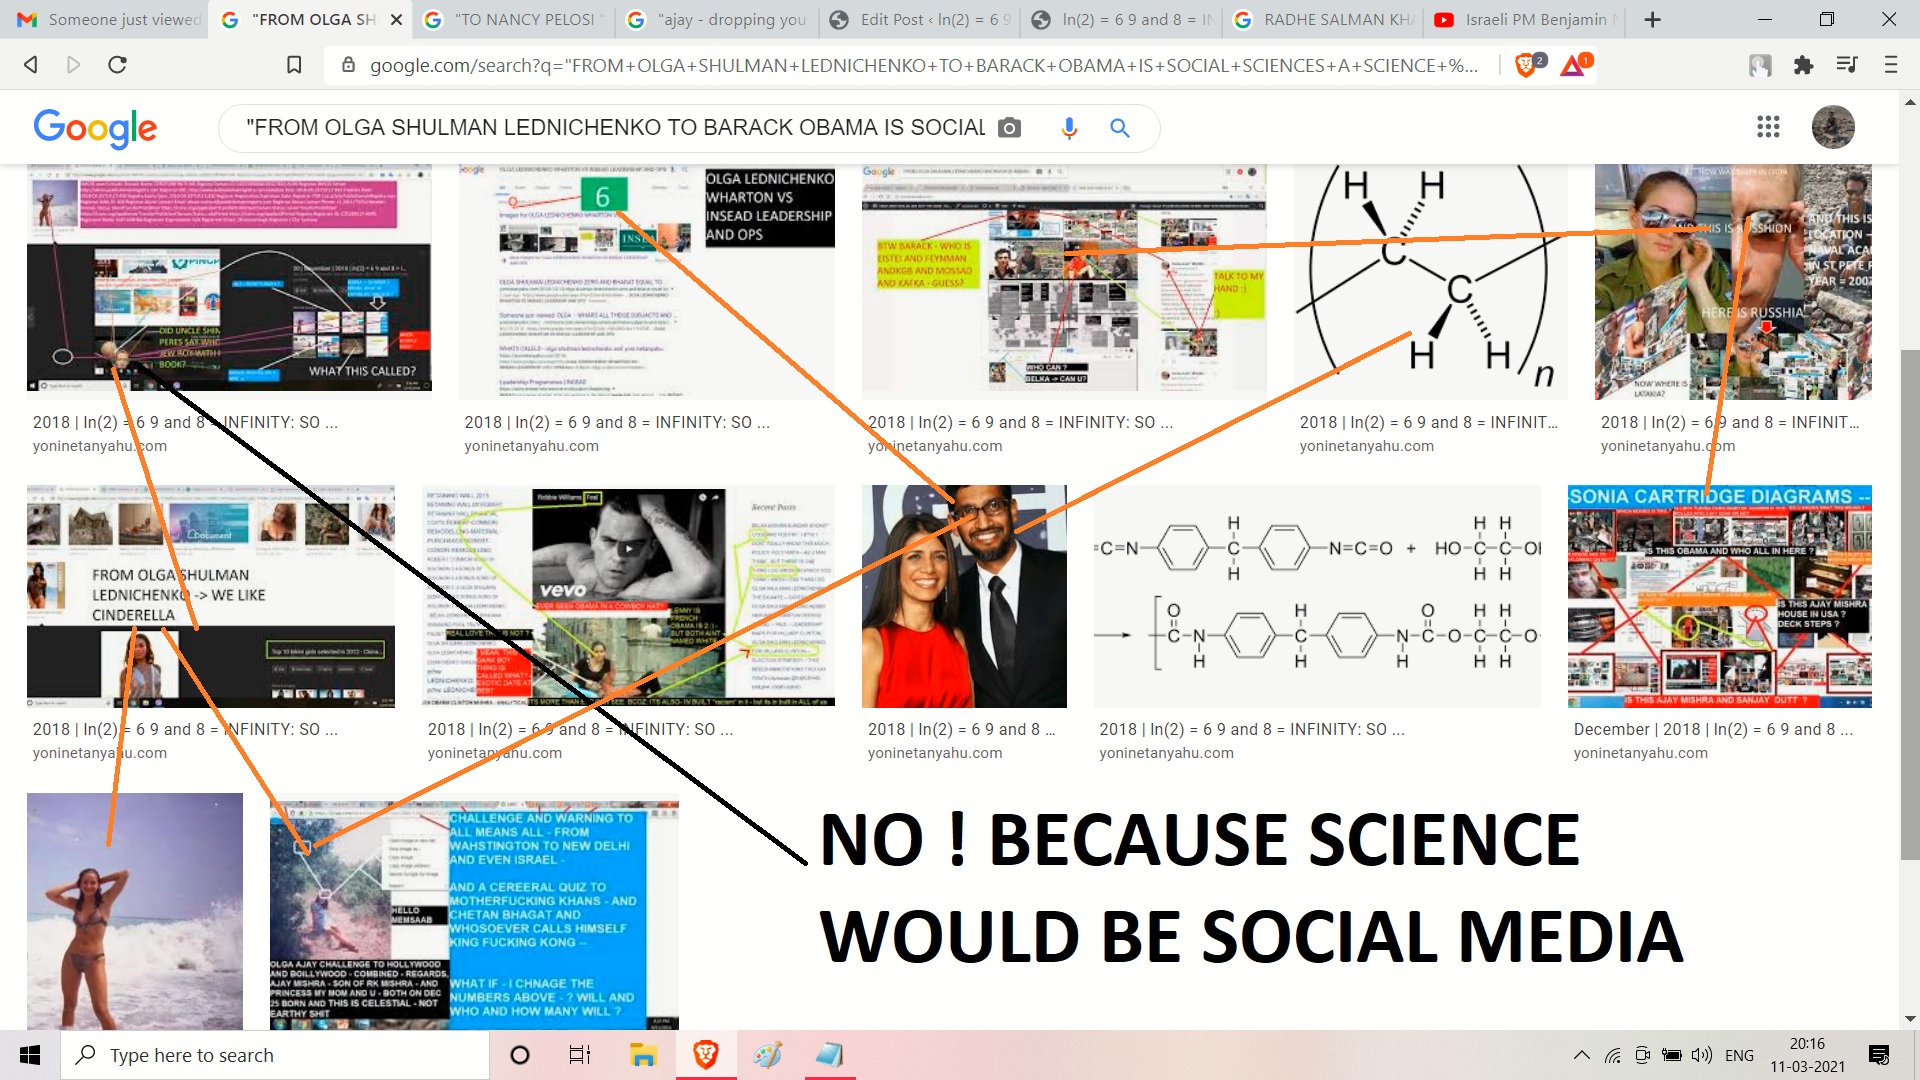 SOCIAL SECINECS ISNT SCIENCE